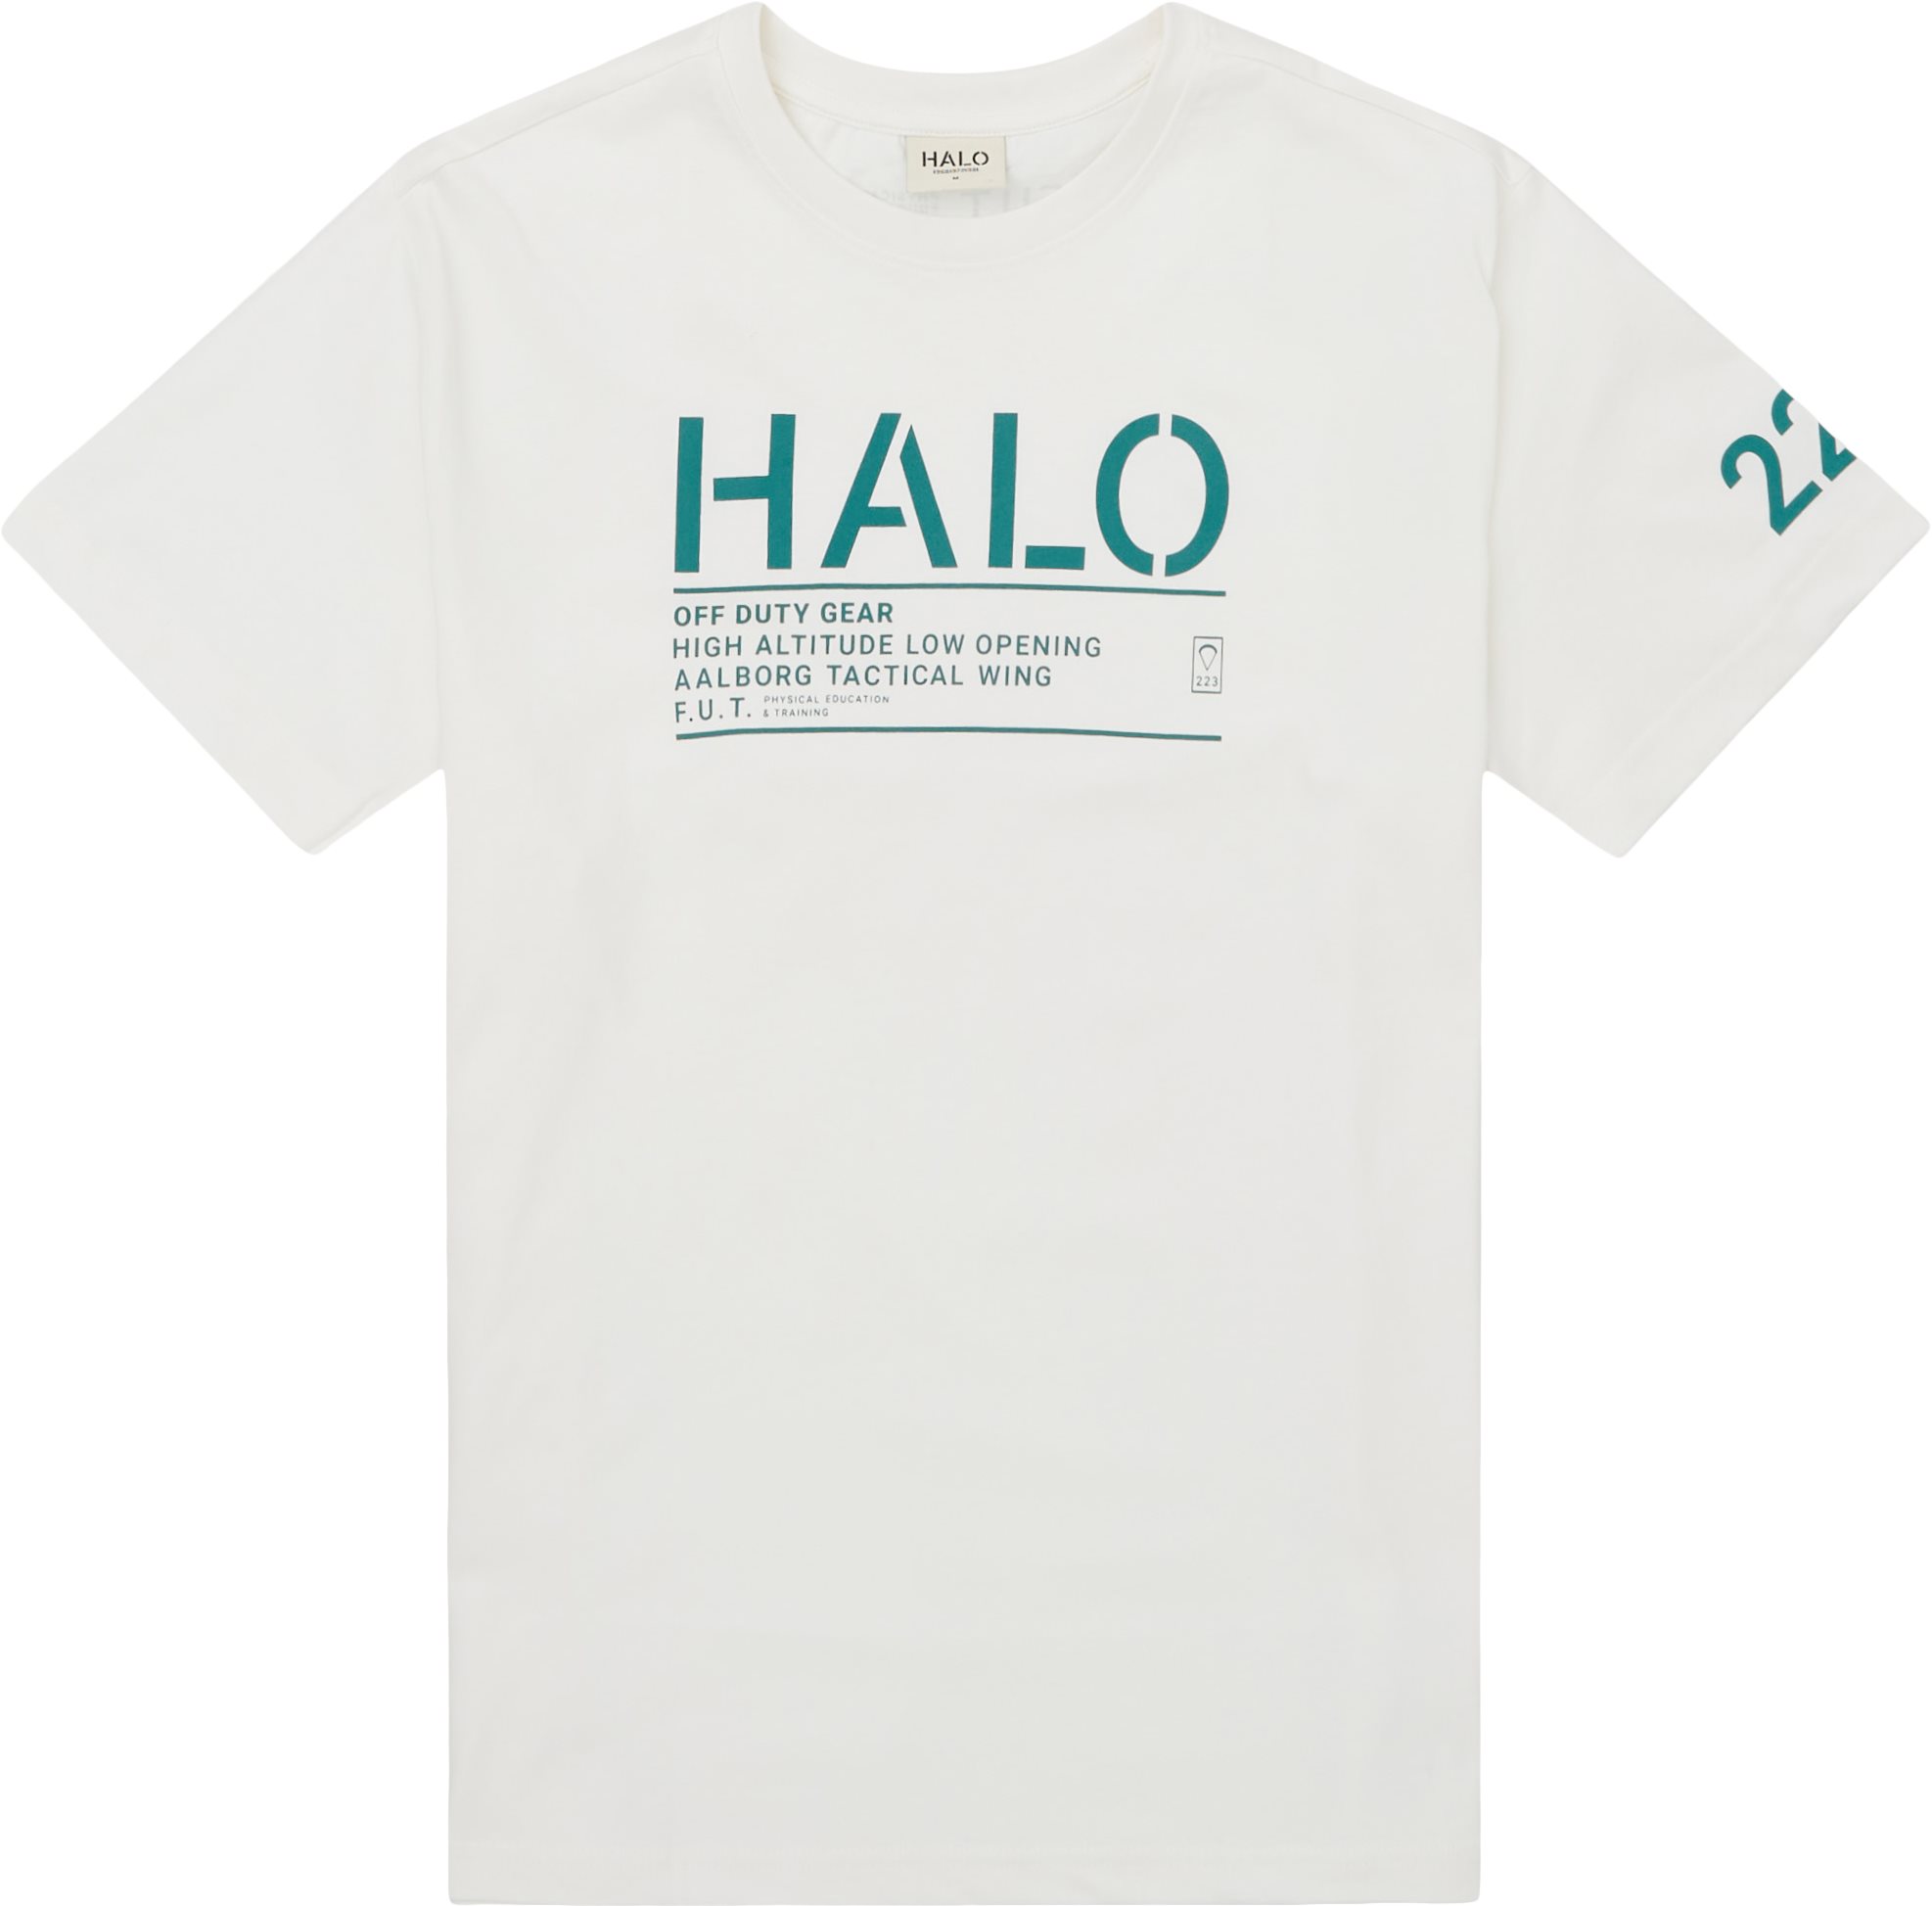 HALO T-shirts LOGO GRAPHIC 228151 Vit